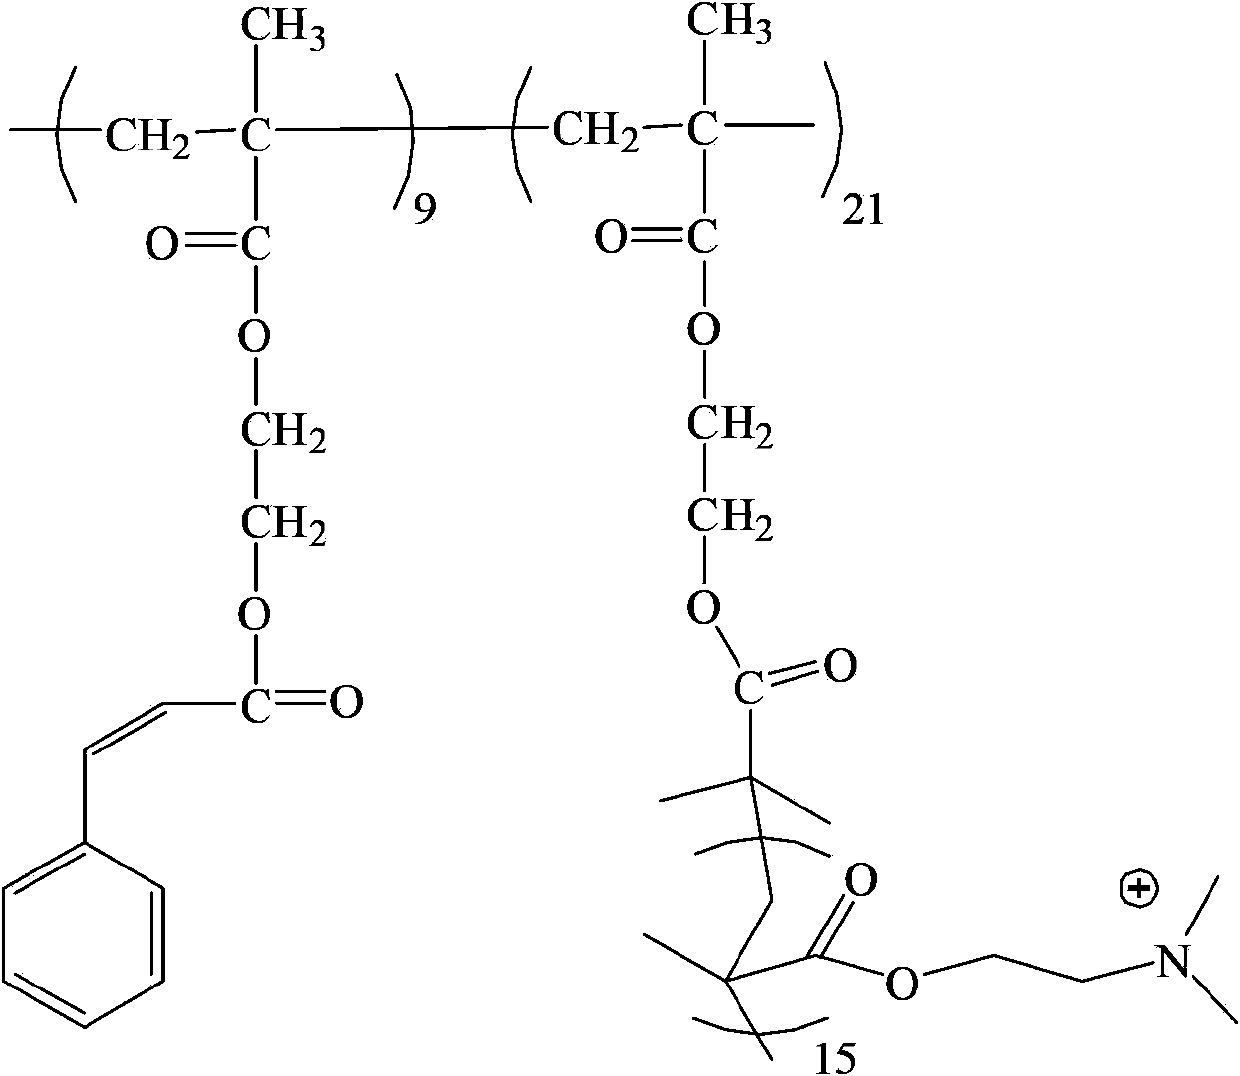 Poly(2-hydroxyethyl methacrylate) and anion exchange membrane for vanadium battery